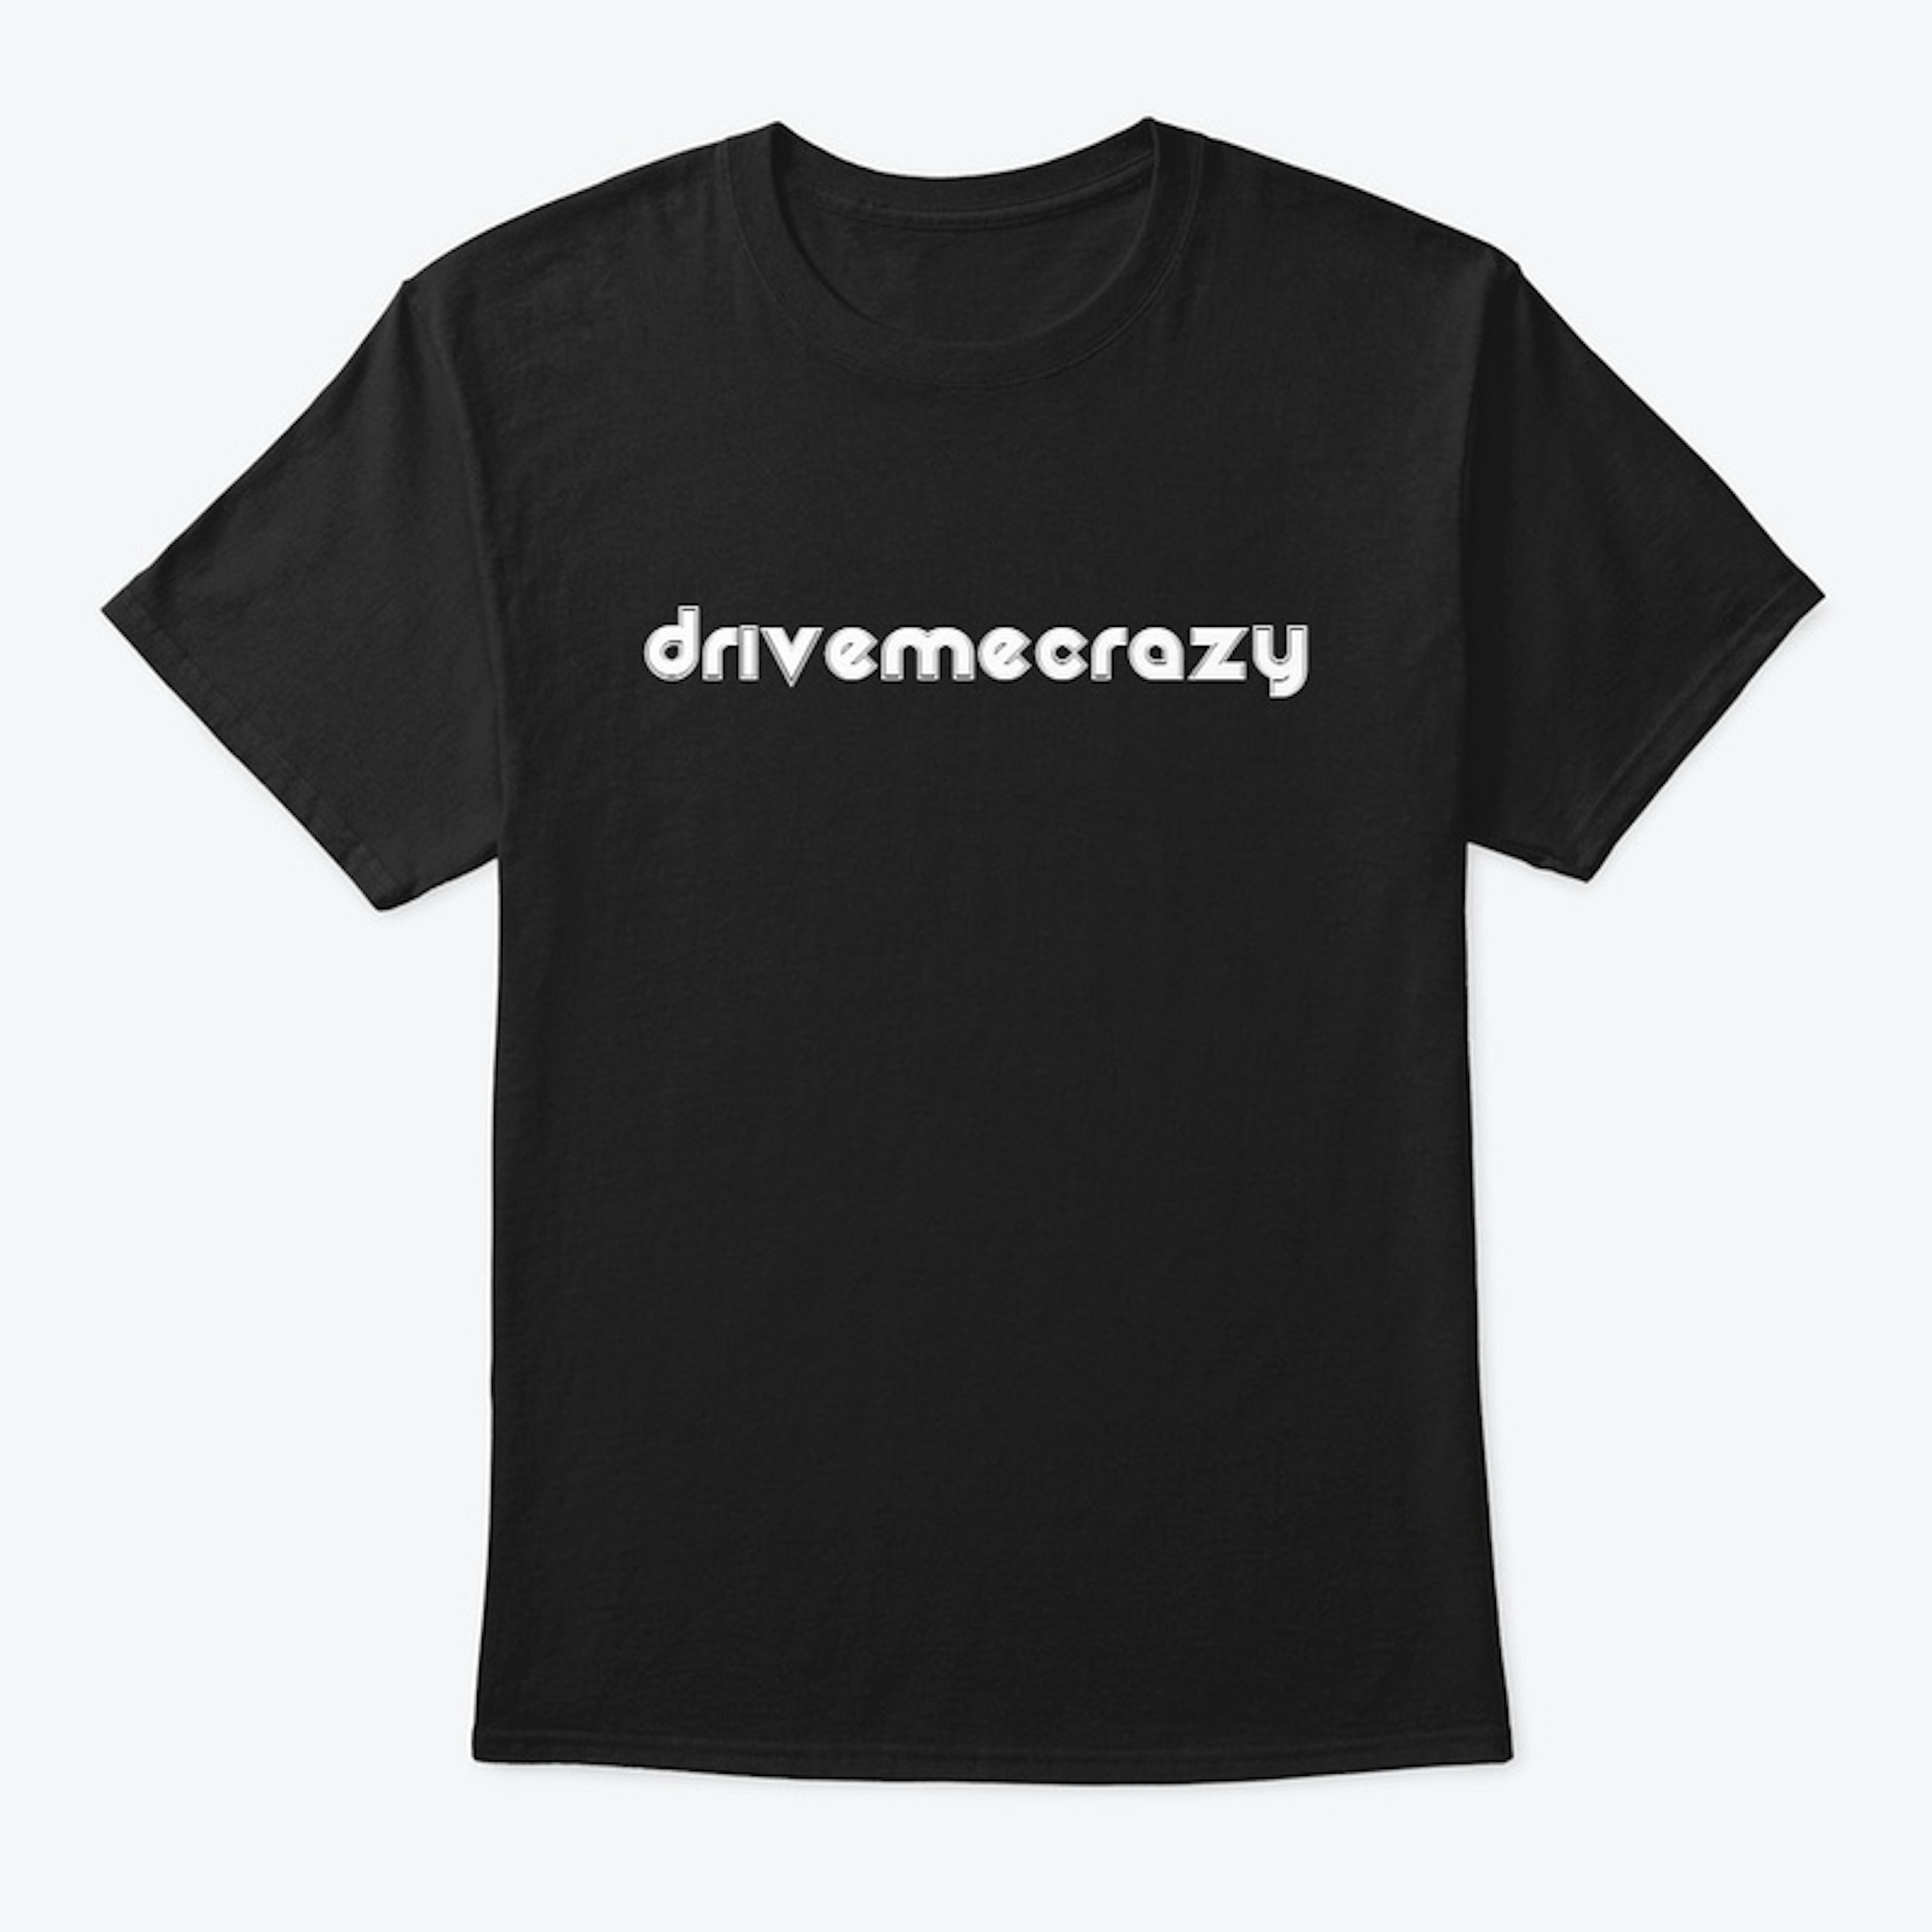 Drive Me Crazy Idiom Shirt